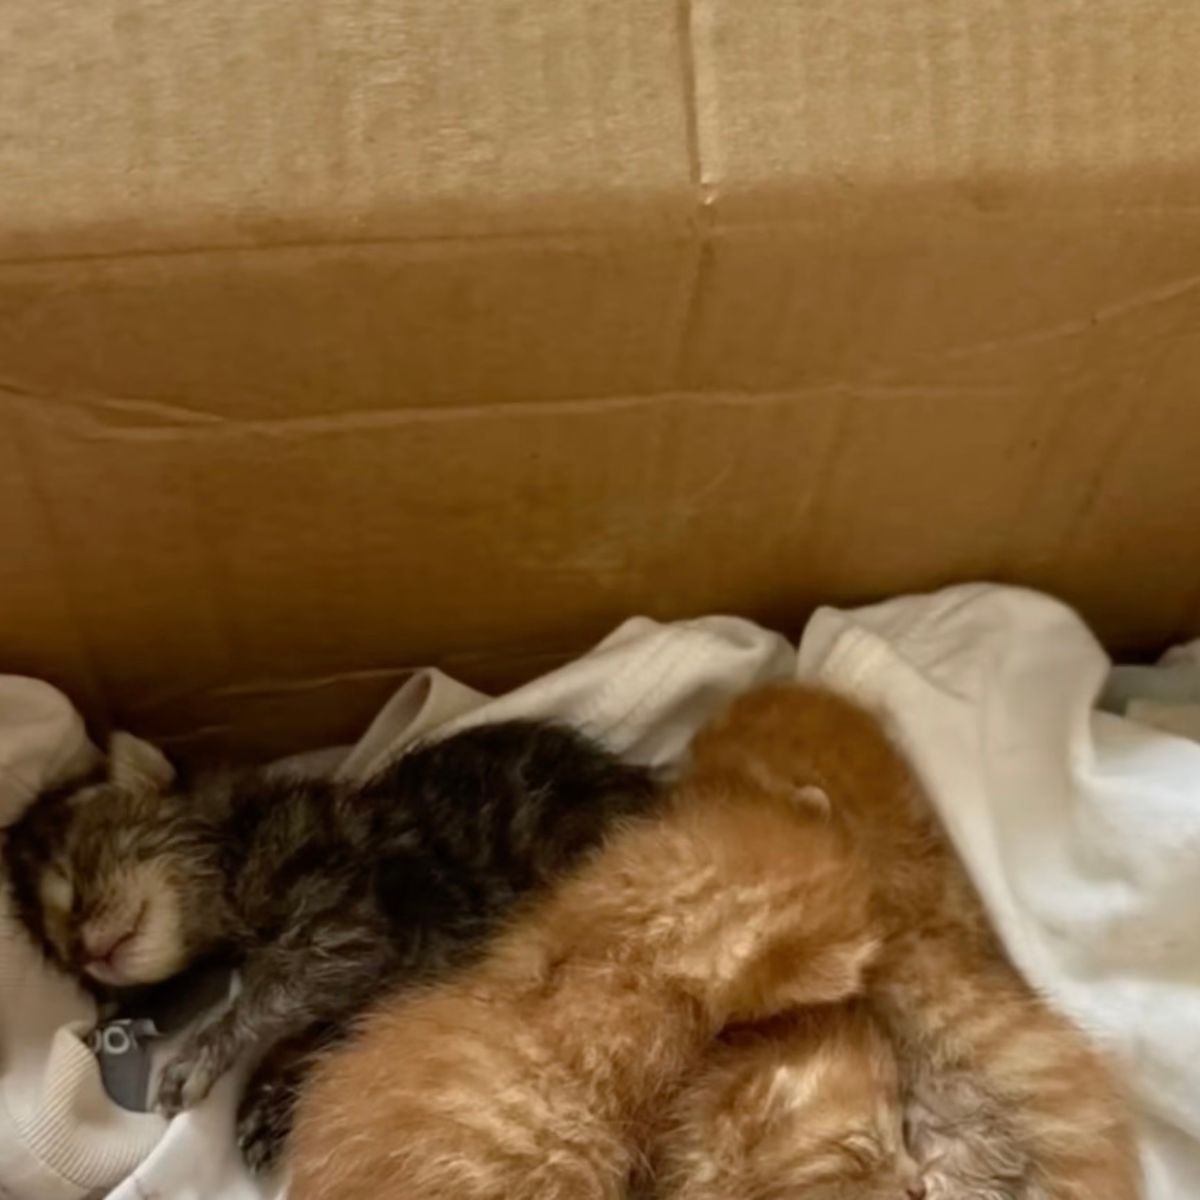 kittens in box